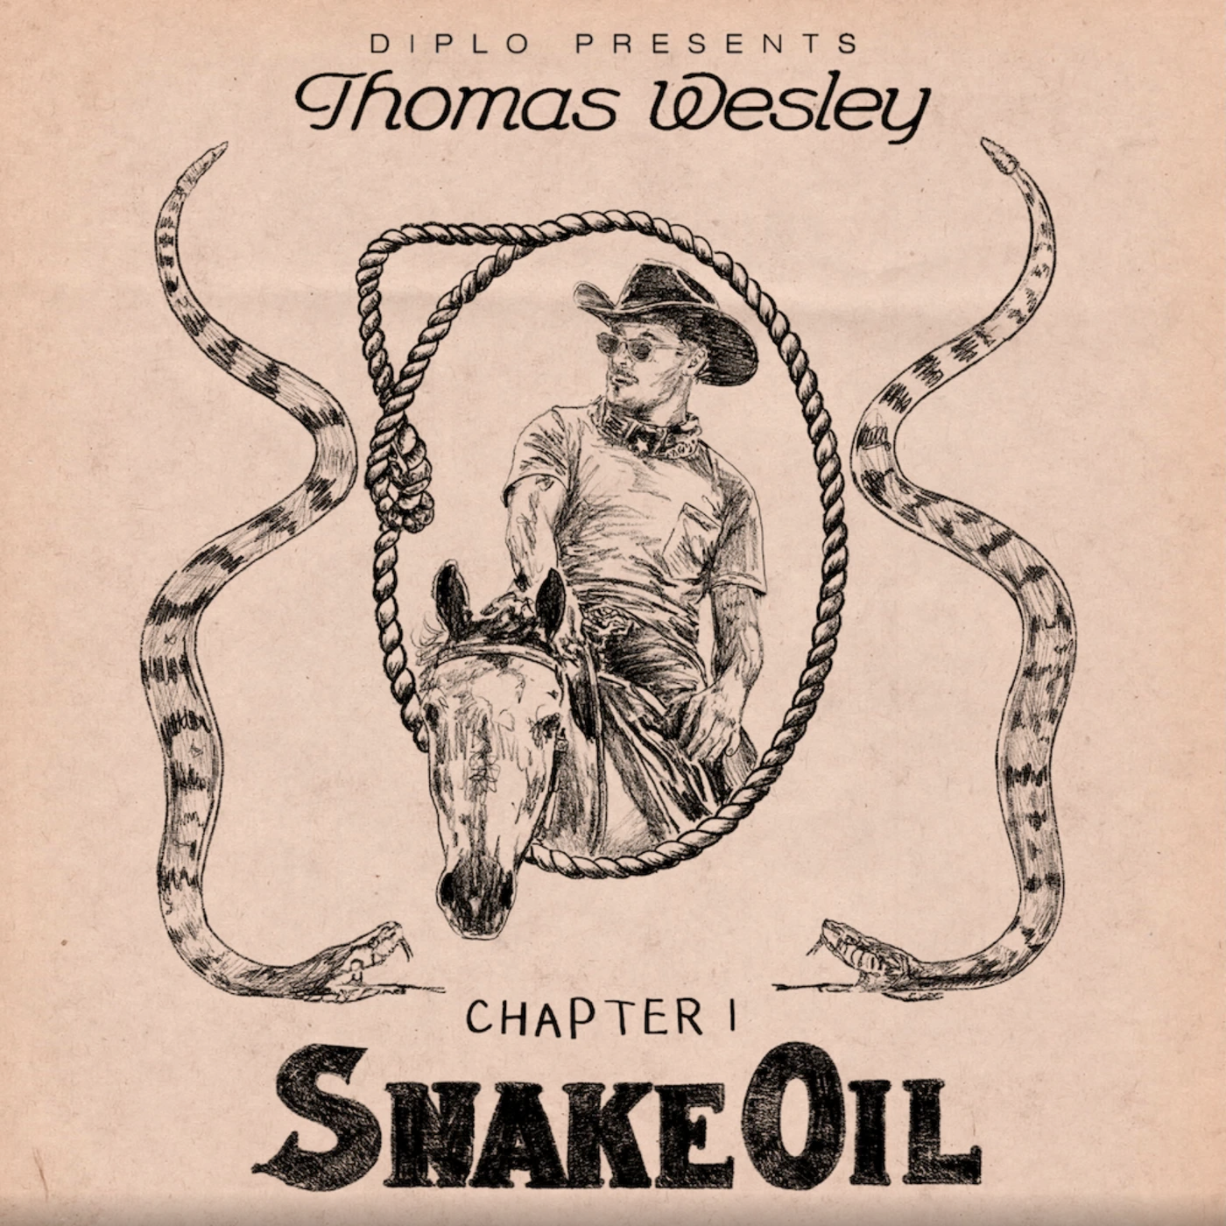 Diplo- Diplo Presents Thomas Wesley Chapter 1: Snake Oil